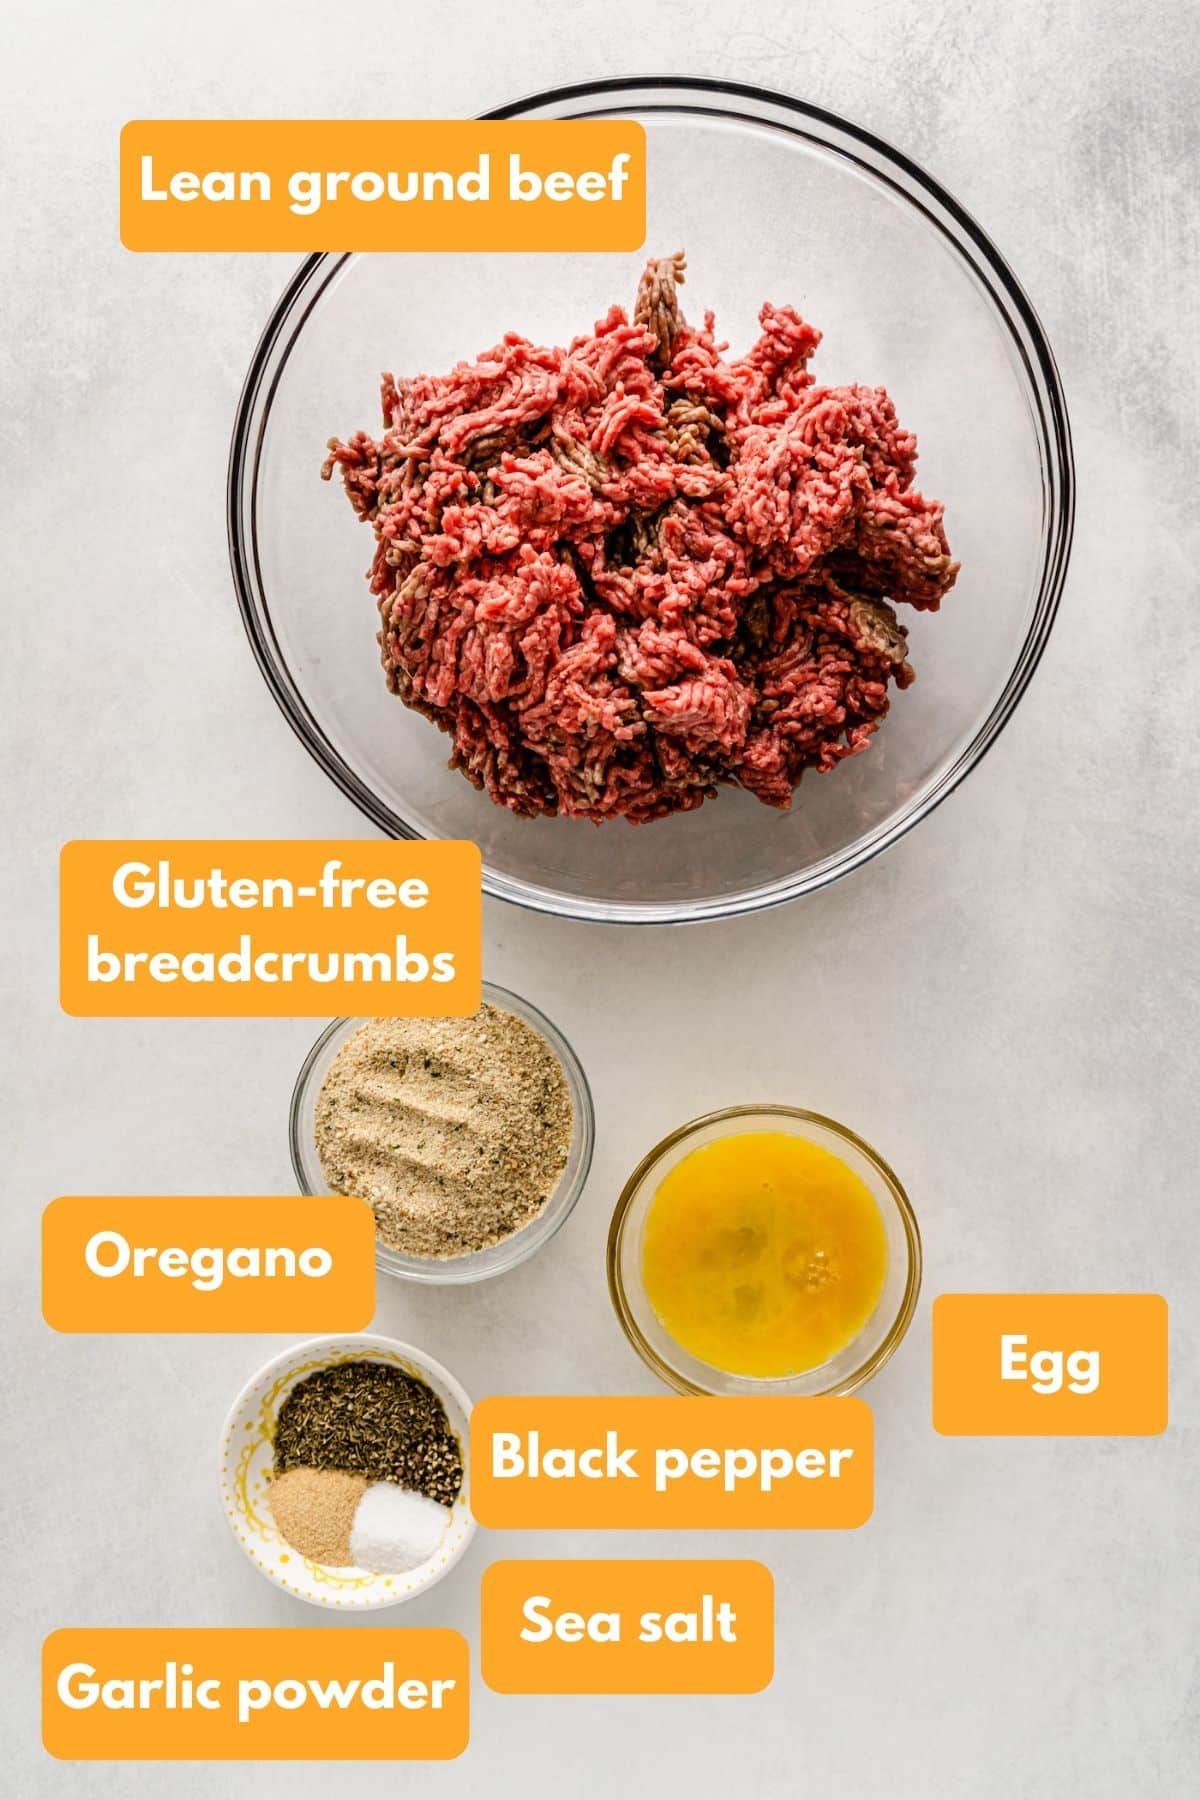 Ingredients for gluten-free meatballs